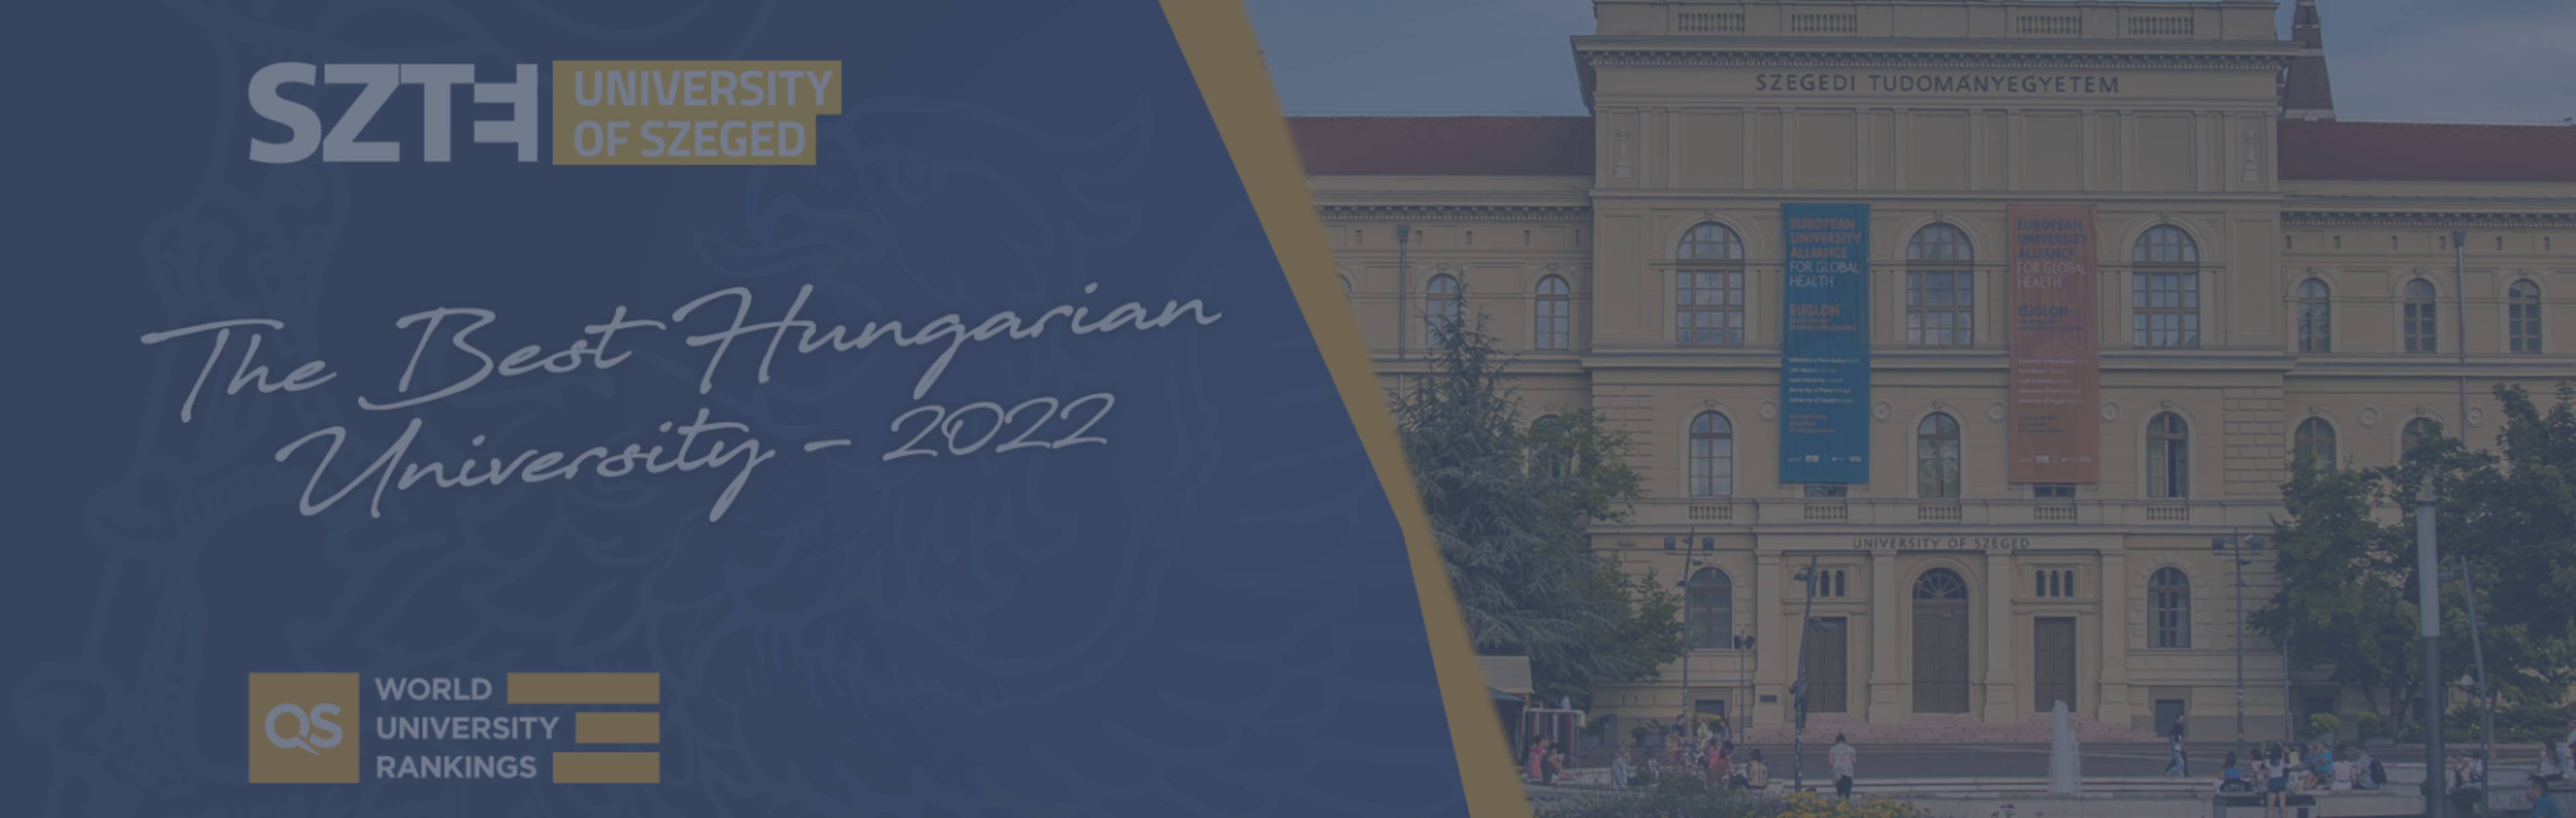 University of Szeged LLM i sammenlignende intellektuel ejendomsret